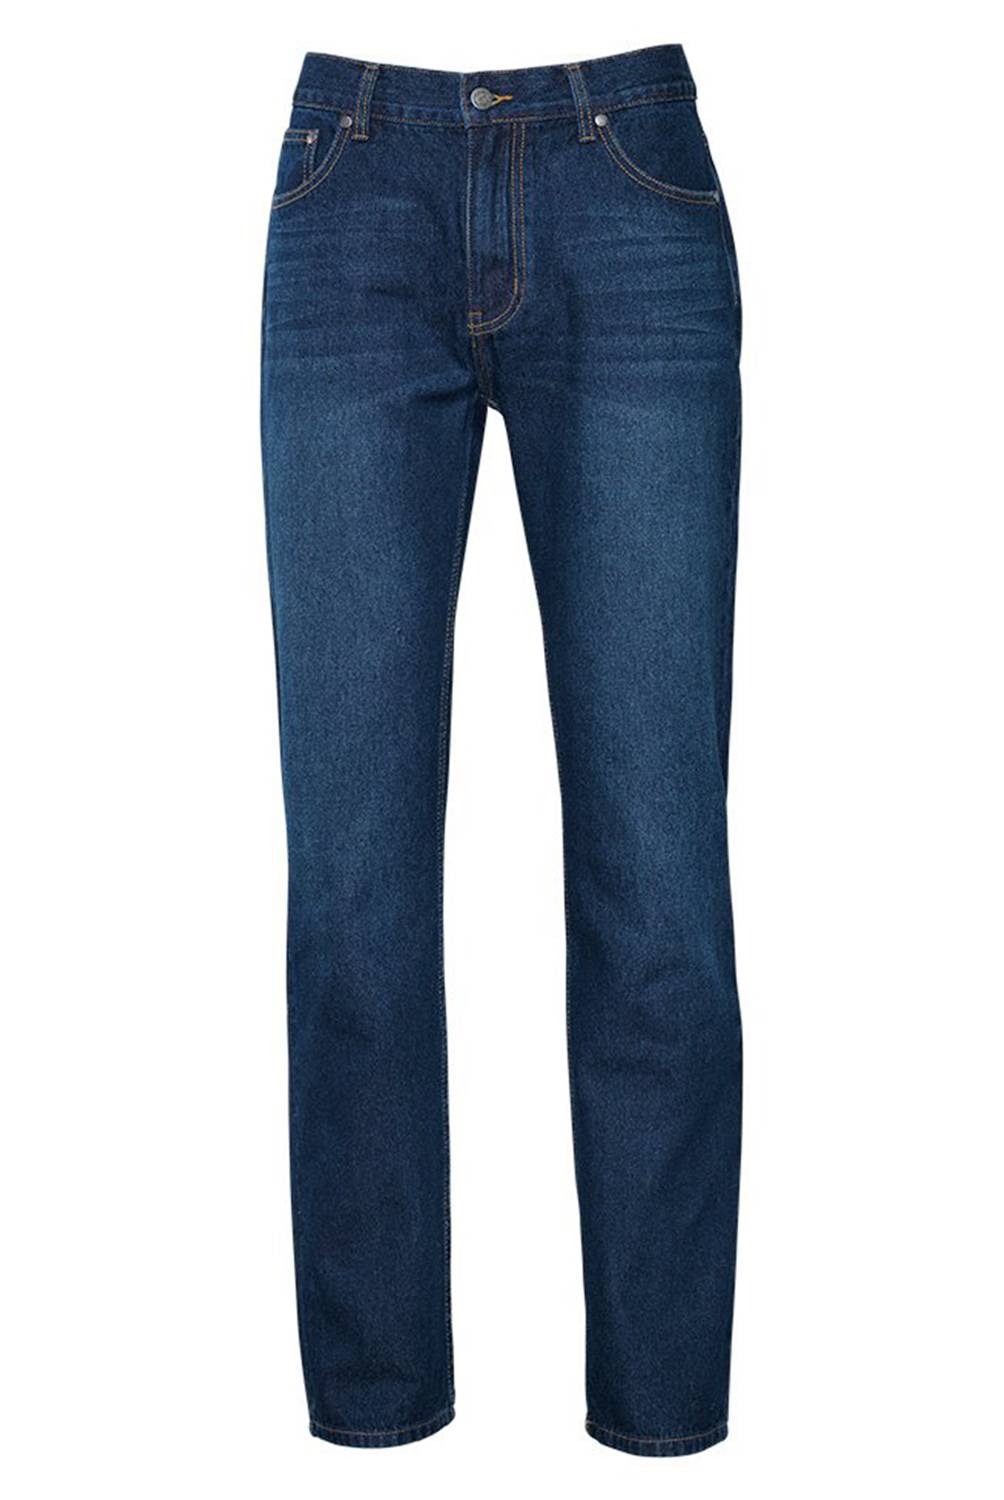 KOTTING - Jeans Denim Fashion